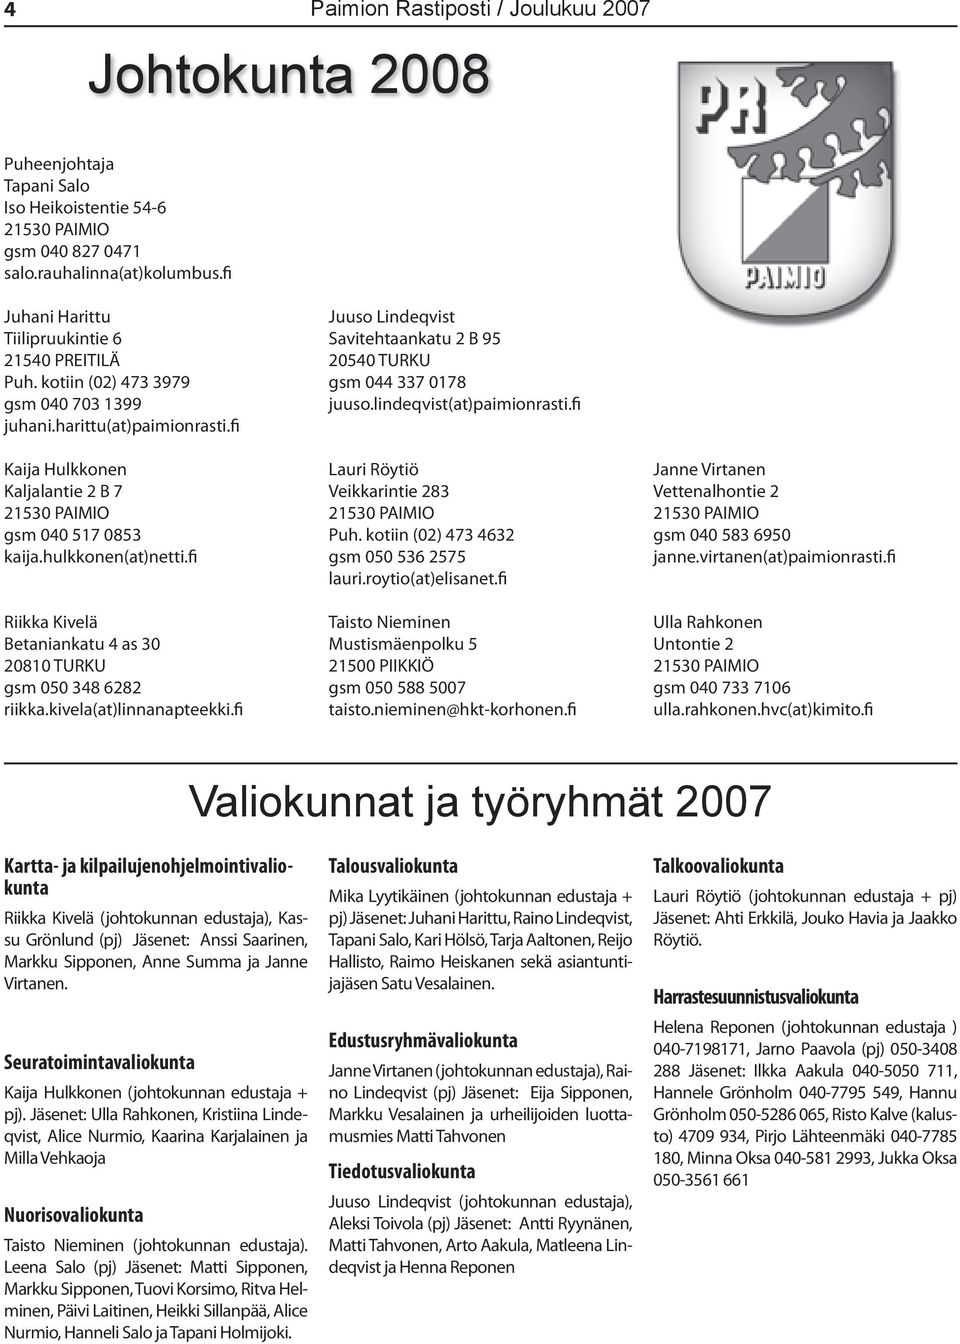 hulkkonen(at)netti.fi Riikka Kivelä Betaniankatu 4 as 30 20810 TURKU gsm 050 348 6282 riikka.kivela(at)linnanapteekki.fi Juuso Lindeqvist Savitehtaankatu 2 B 95 20540 TURKU gsm 044 337 0178 juuso.